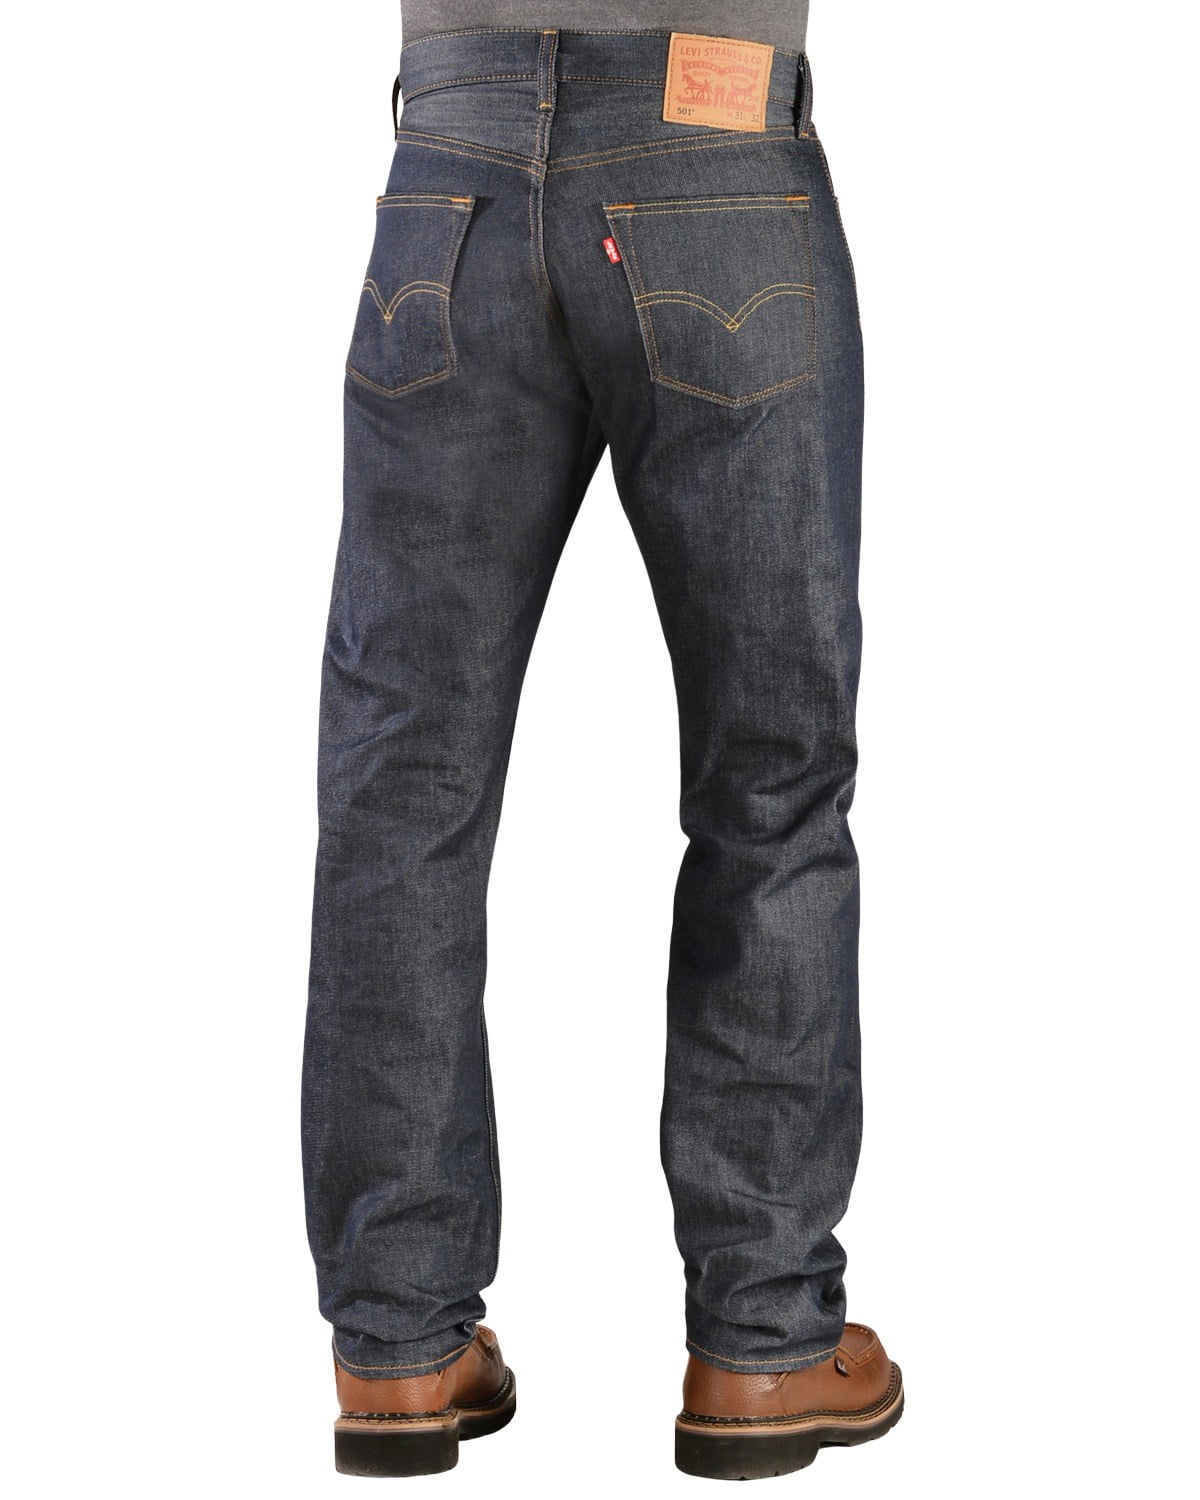 Levi's Men's 501 Original Shrink-To-Fit Regular Straight Leg Jeans Indigo  35W x 32L US 